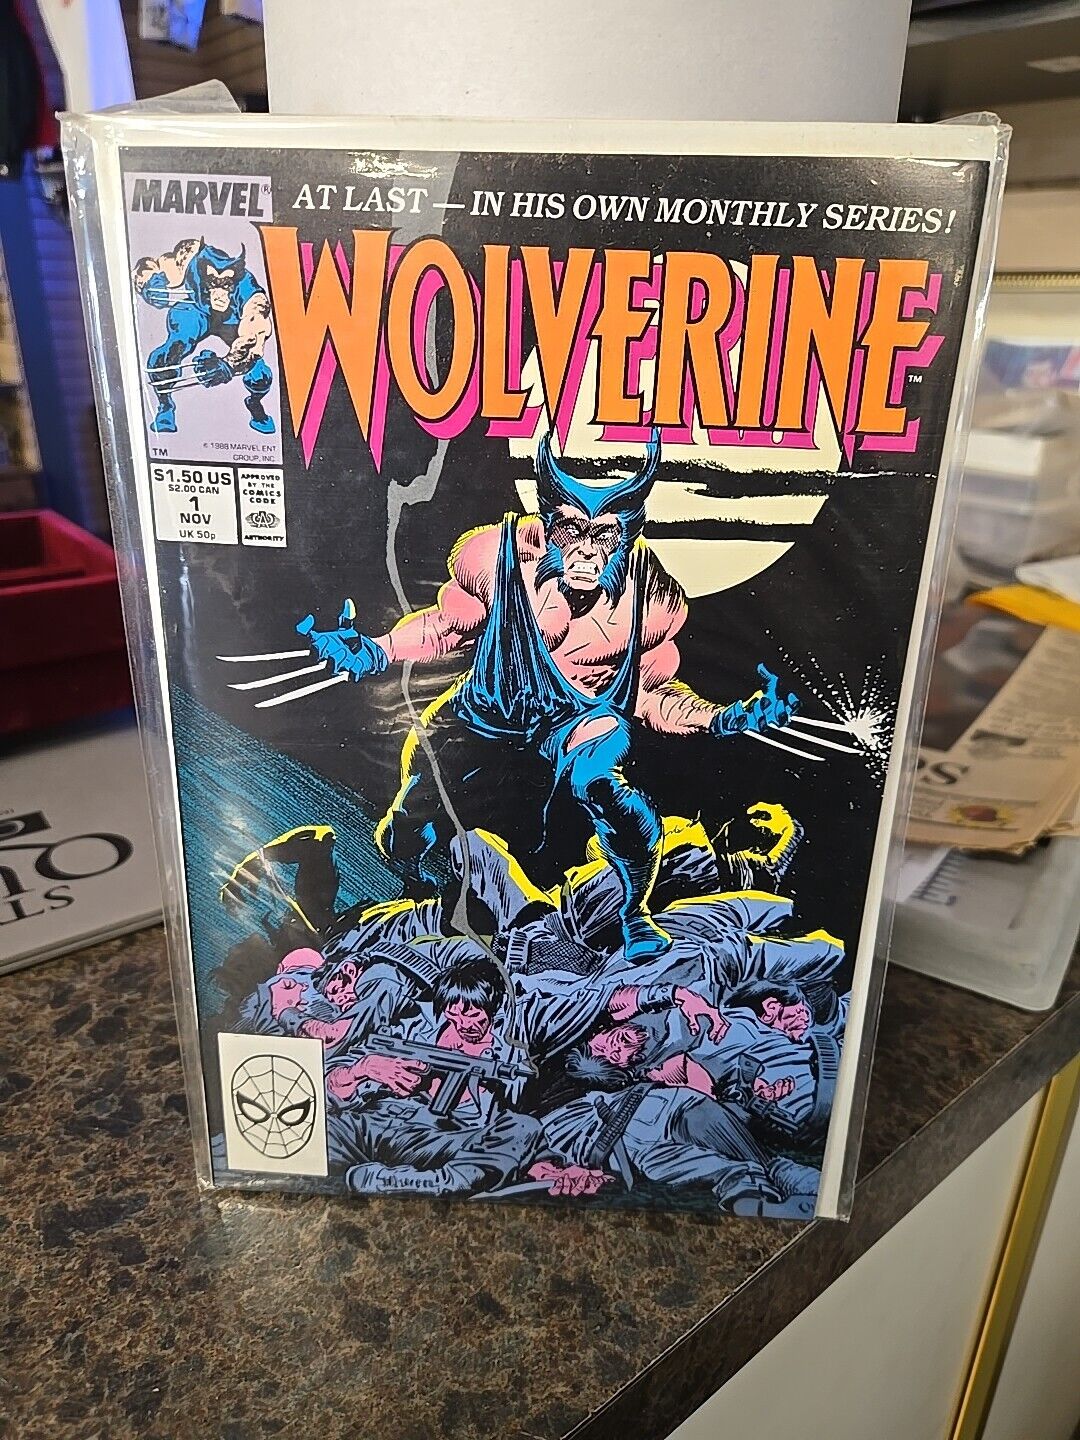 Wolverine #1 (Marvel Comics November 1988) Not a Reprint